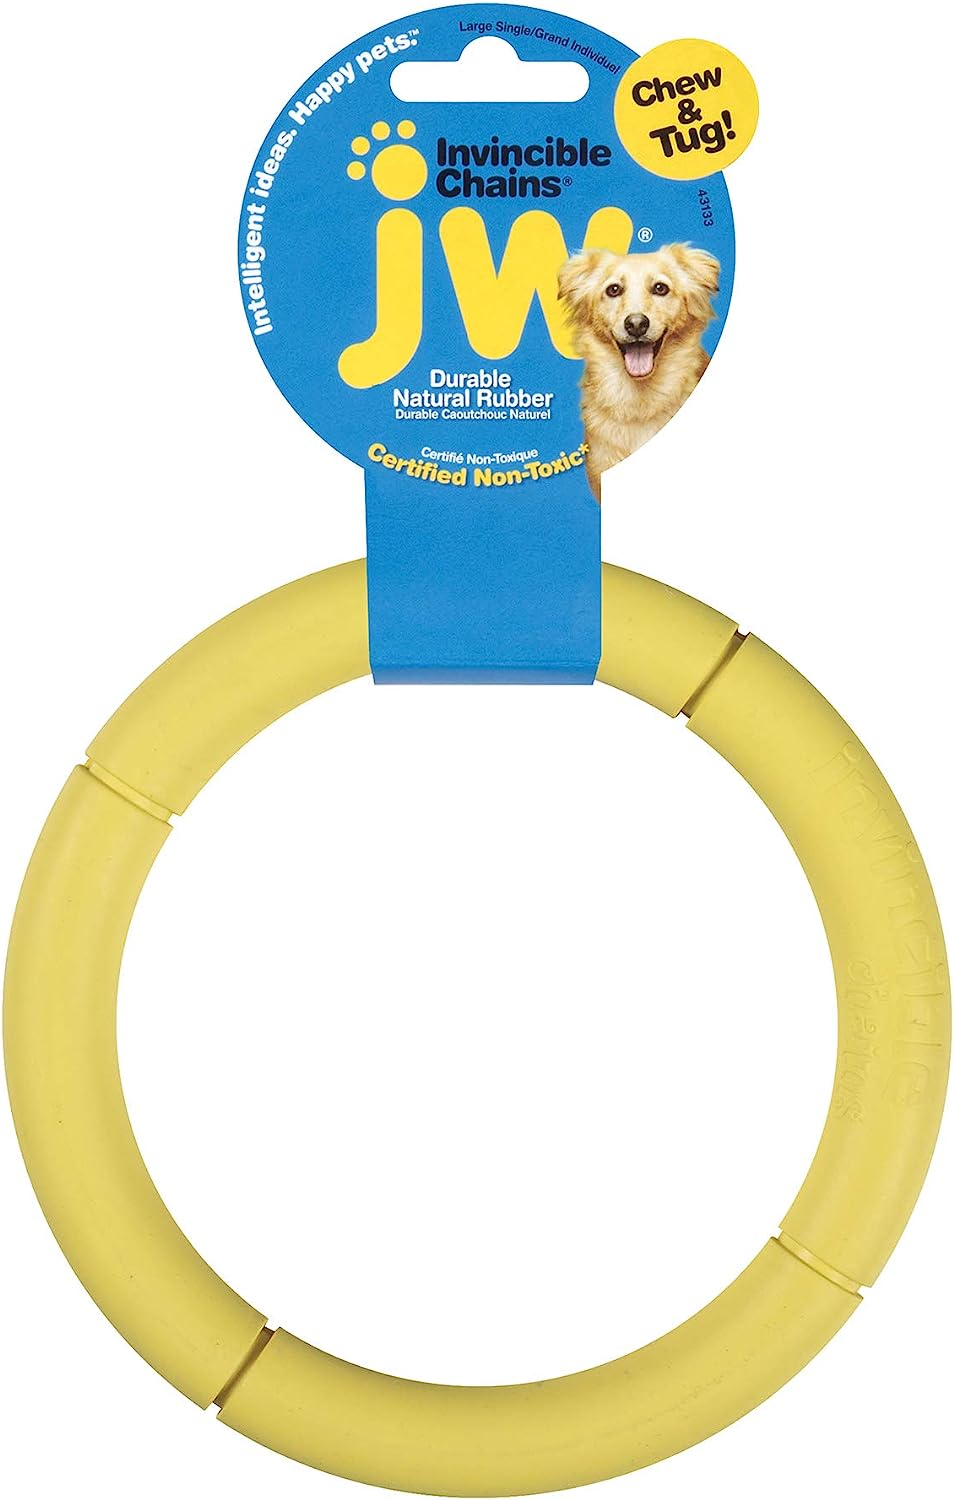 JW-Pet-Company-Invincible-Chains-LS-Single-Dog-Toy-Large